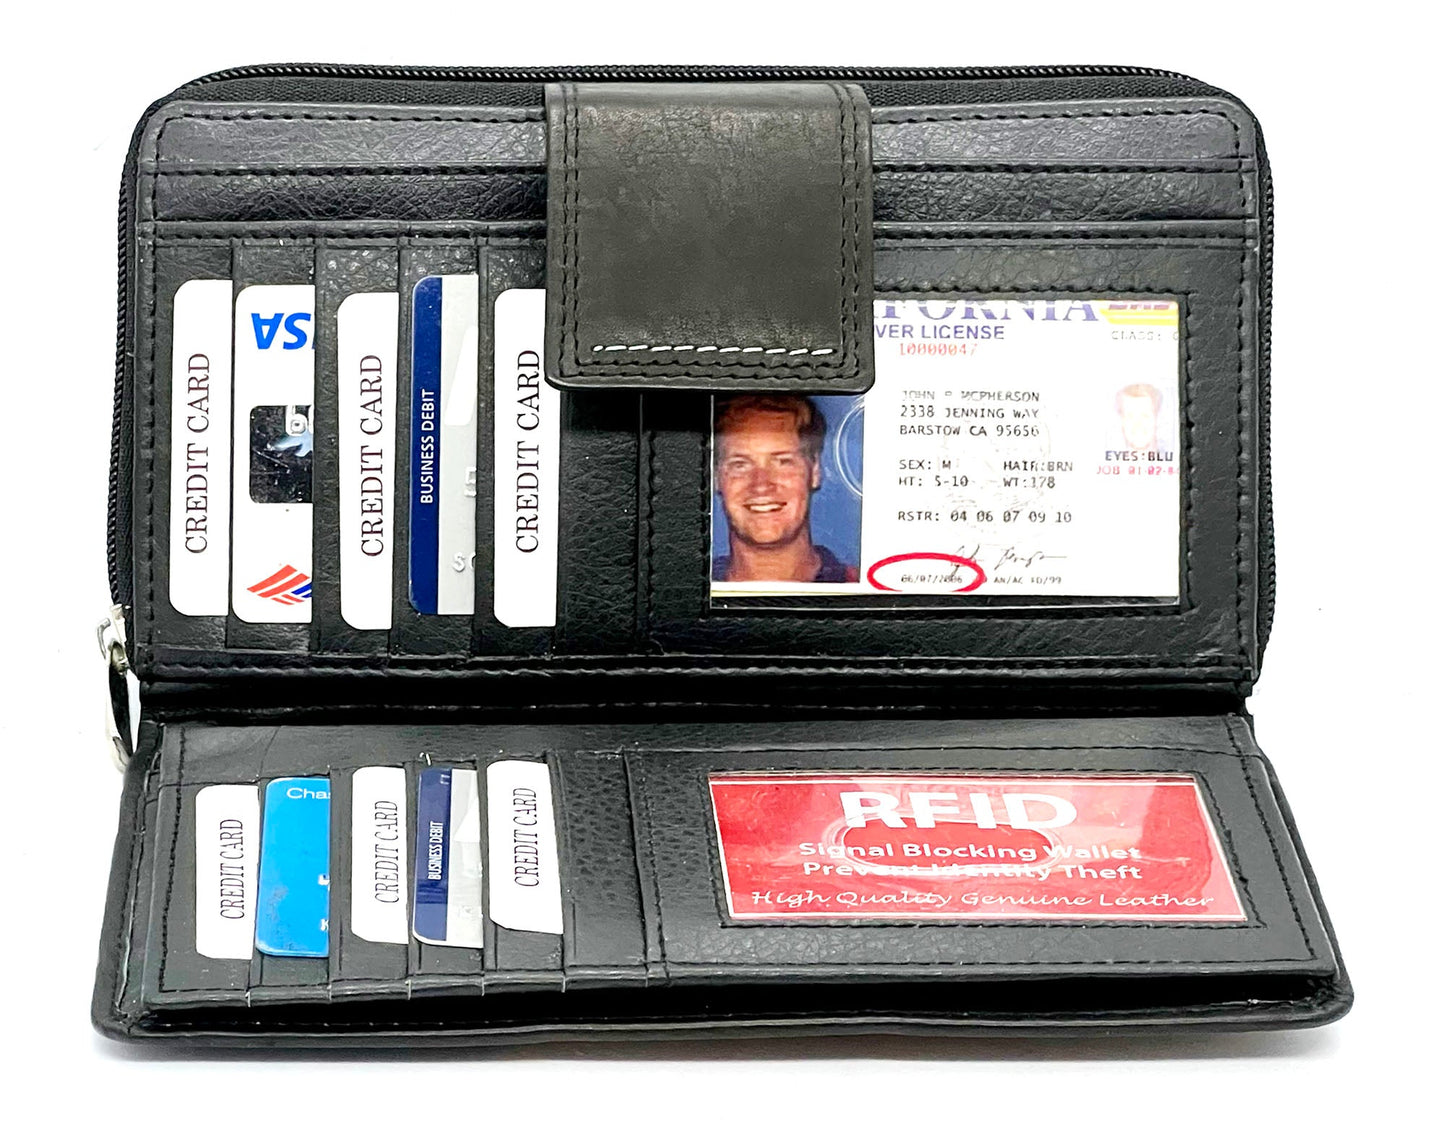 Black Leather Women's Clutch Wallet Checkbook Cover Card Secretary Organizer Premium Quality New